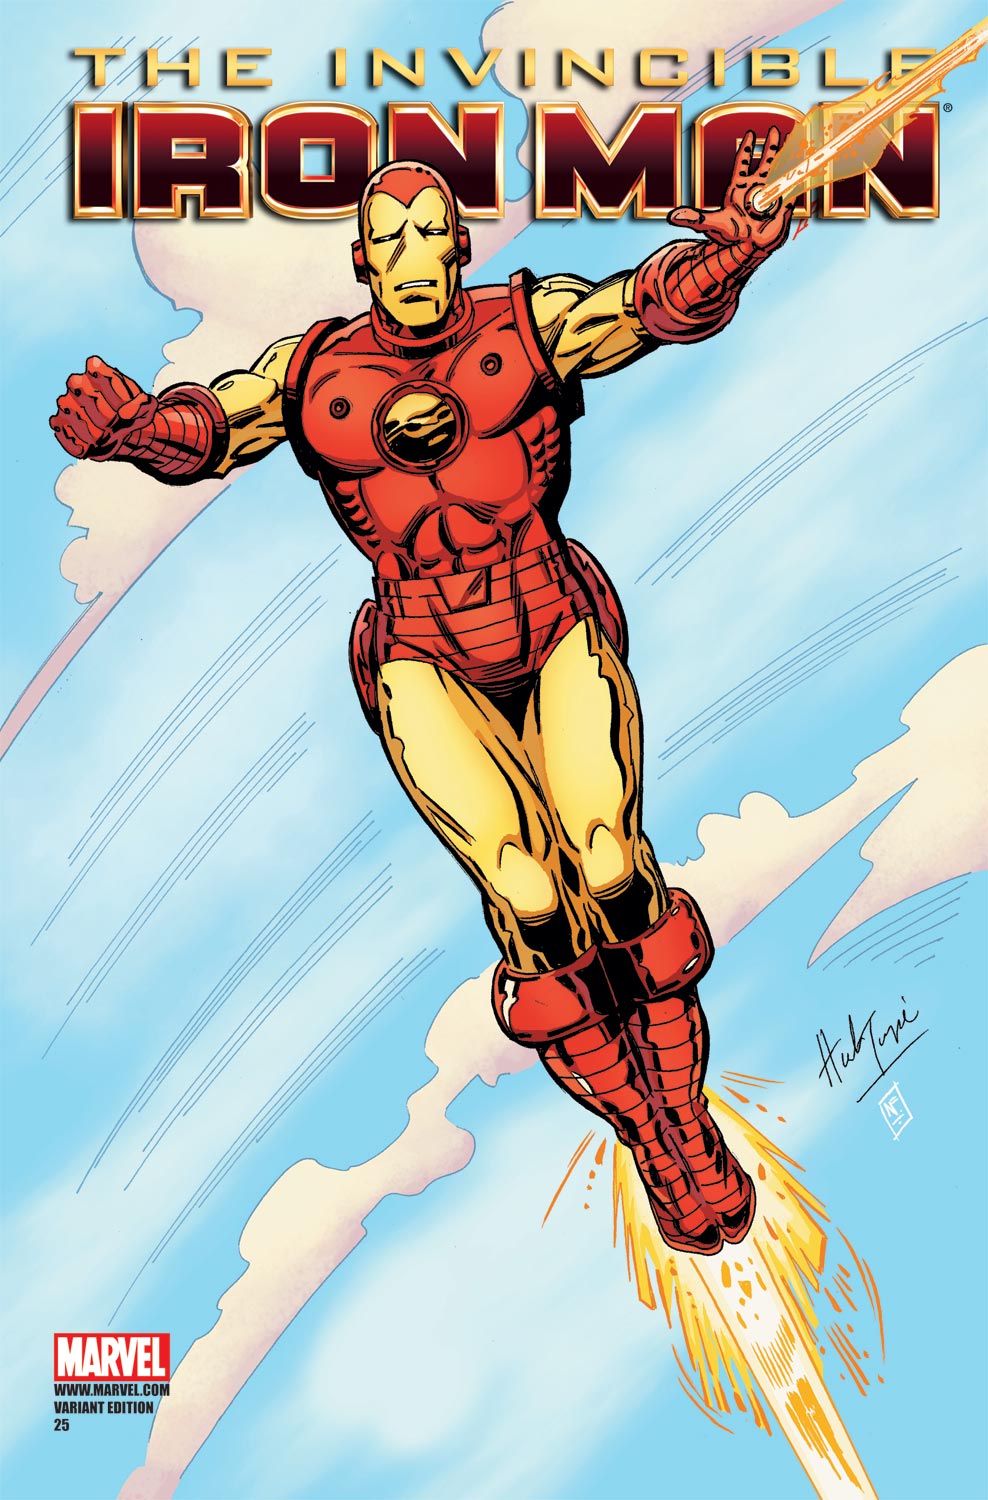 Invincible Iron Man (2008) #25 (TRIMPE VARIANT)